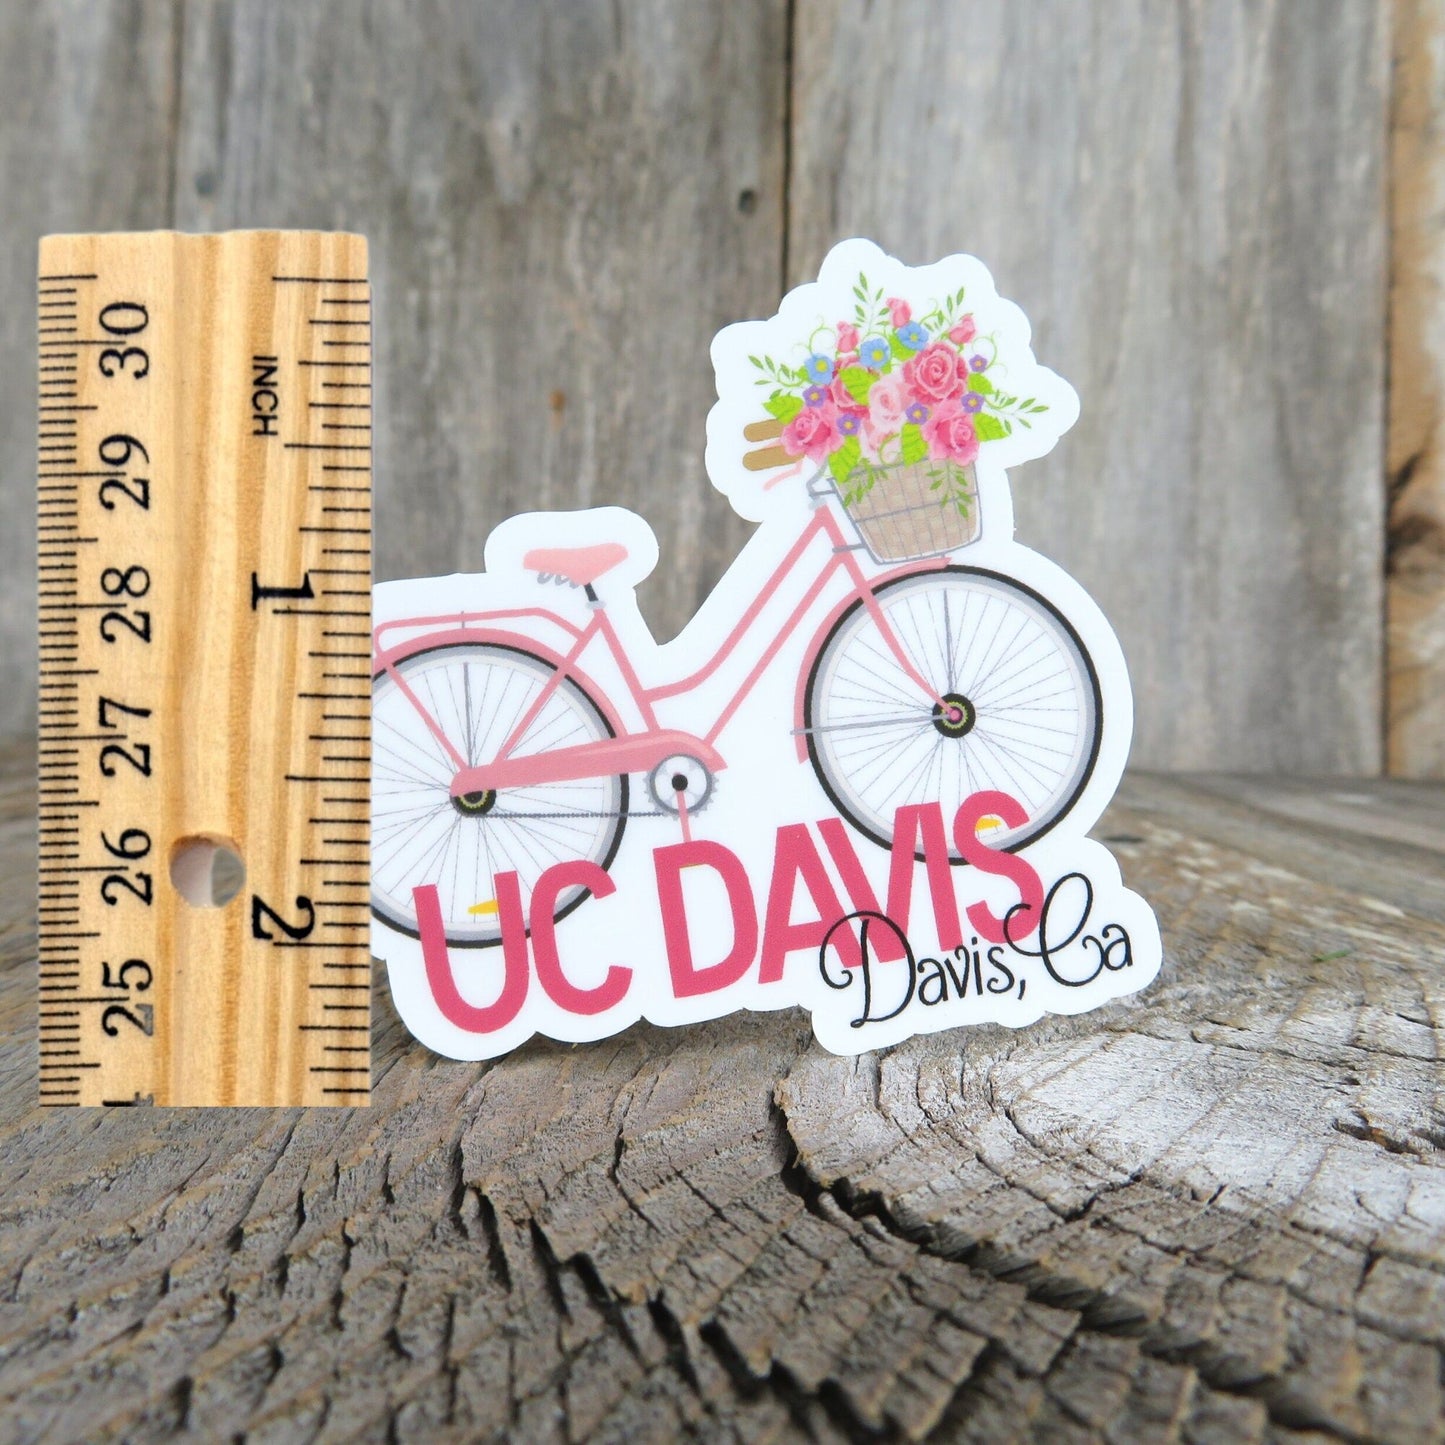 UC Davis California Sticker Pink Cruiser Bike With Flower Basket Full Color Bike Riding